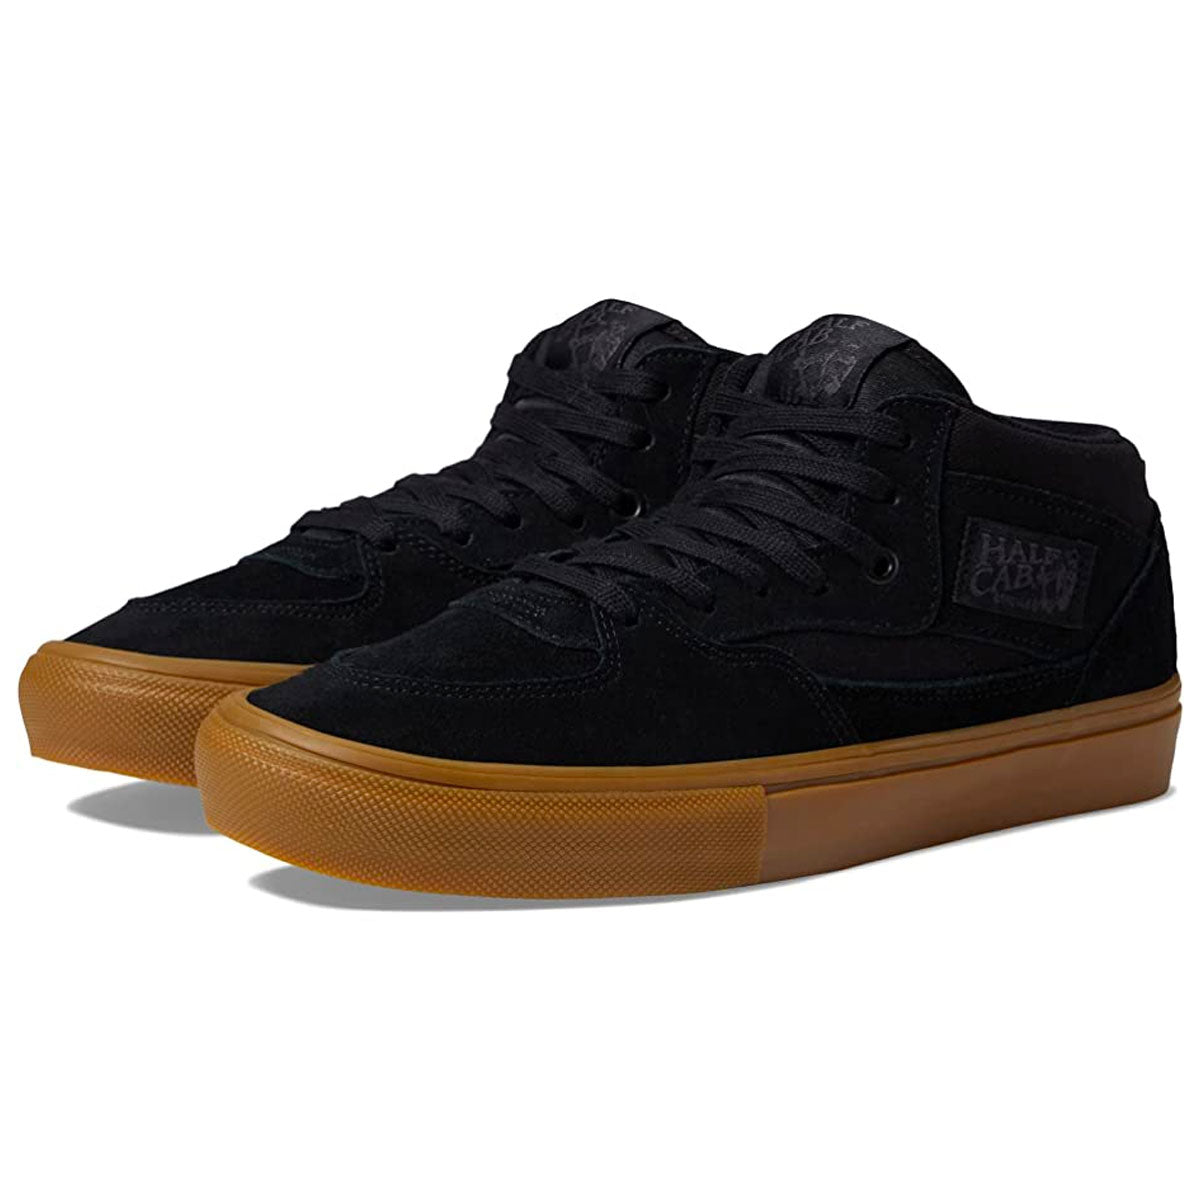 Vans Skate Half Cab Shoes - Black/Gum